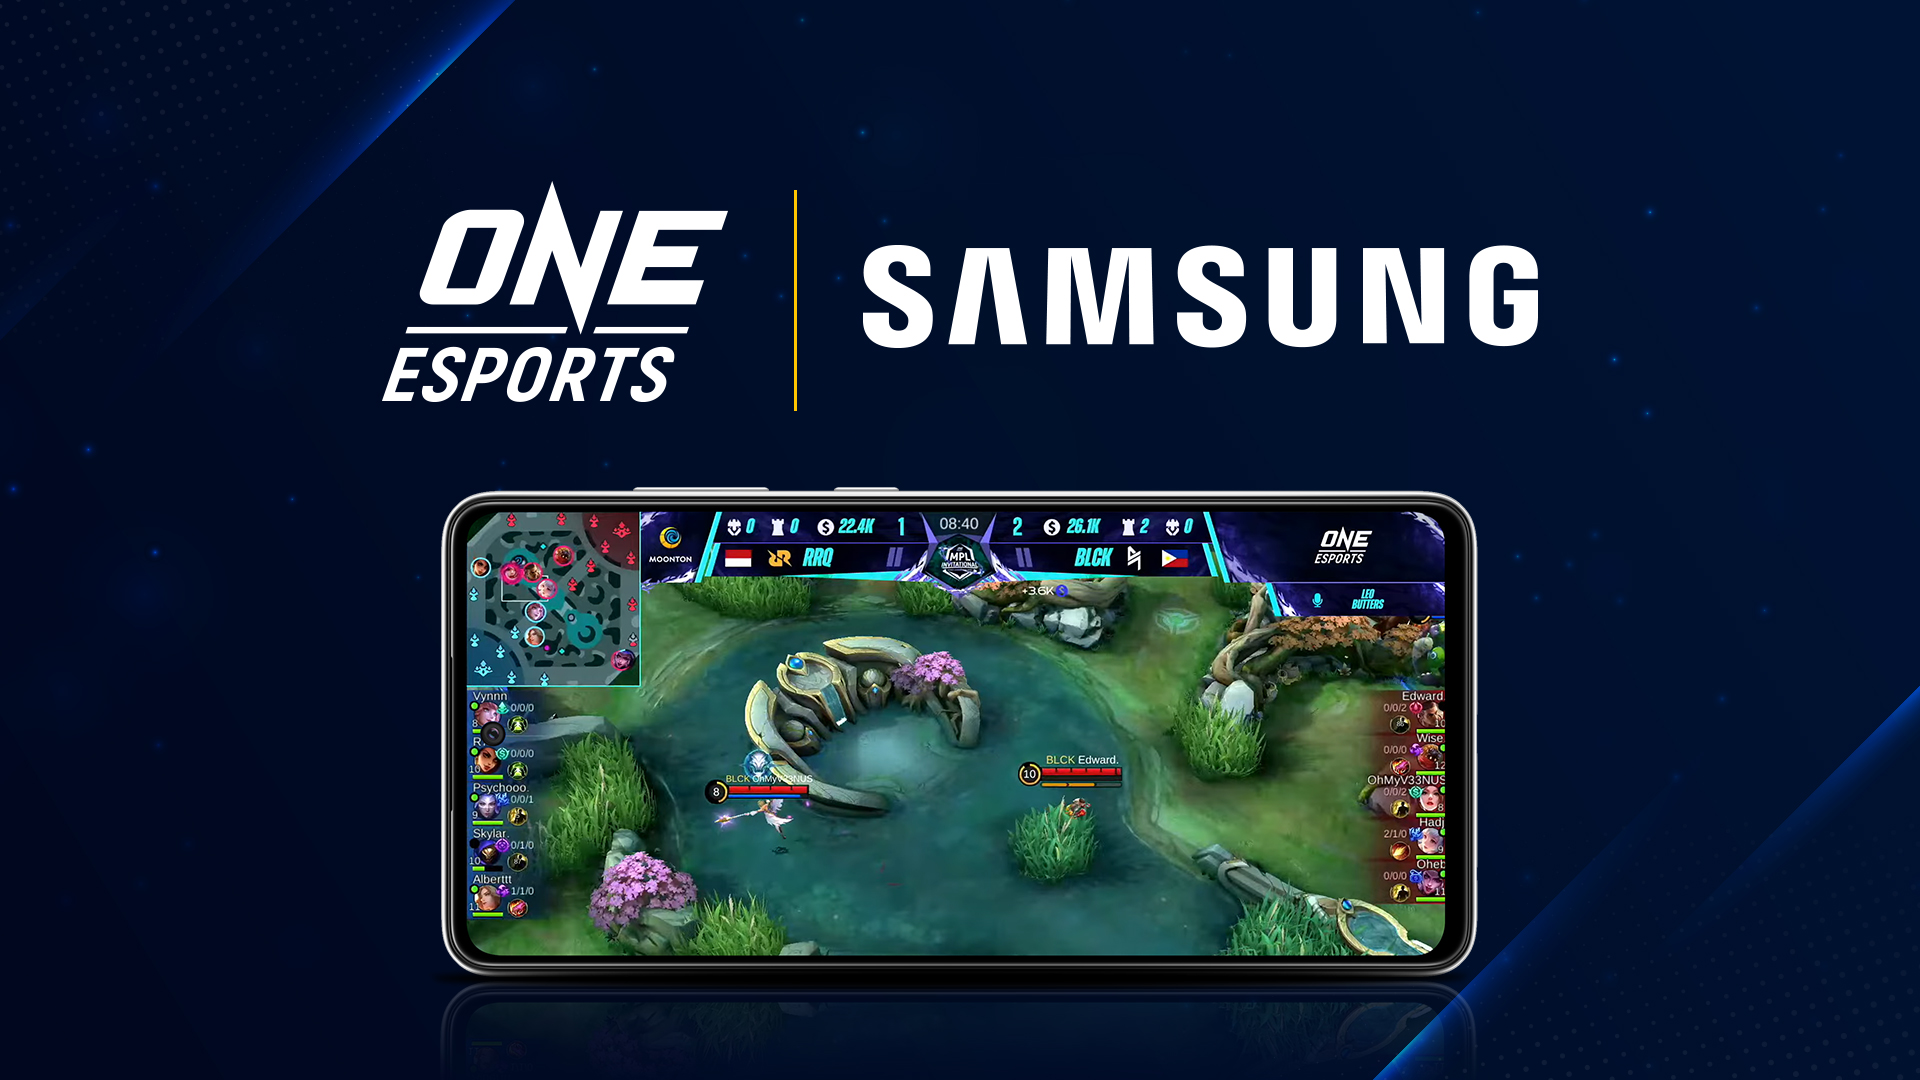 ONE Esports และ Samsung จับมือร่วมเป็นพันธมิตรระยะยาว พร้อมเปิดตัวแอปพลิเคชัน “ONE Esports”